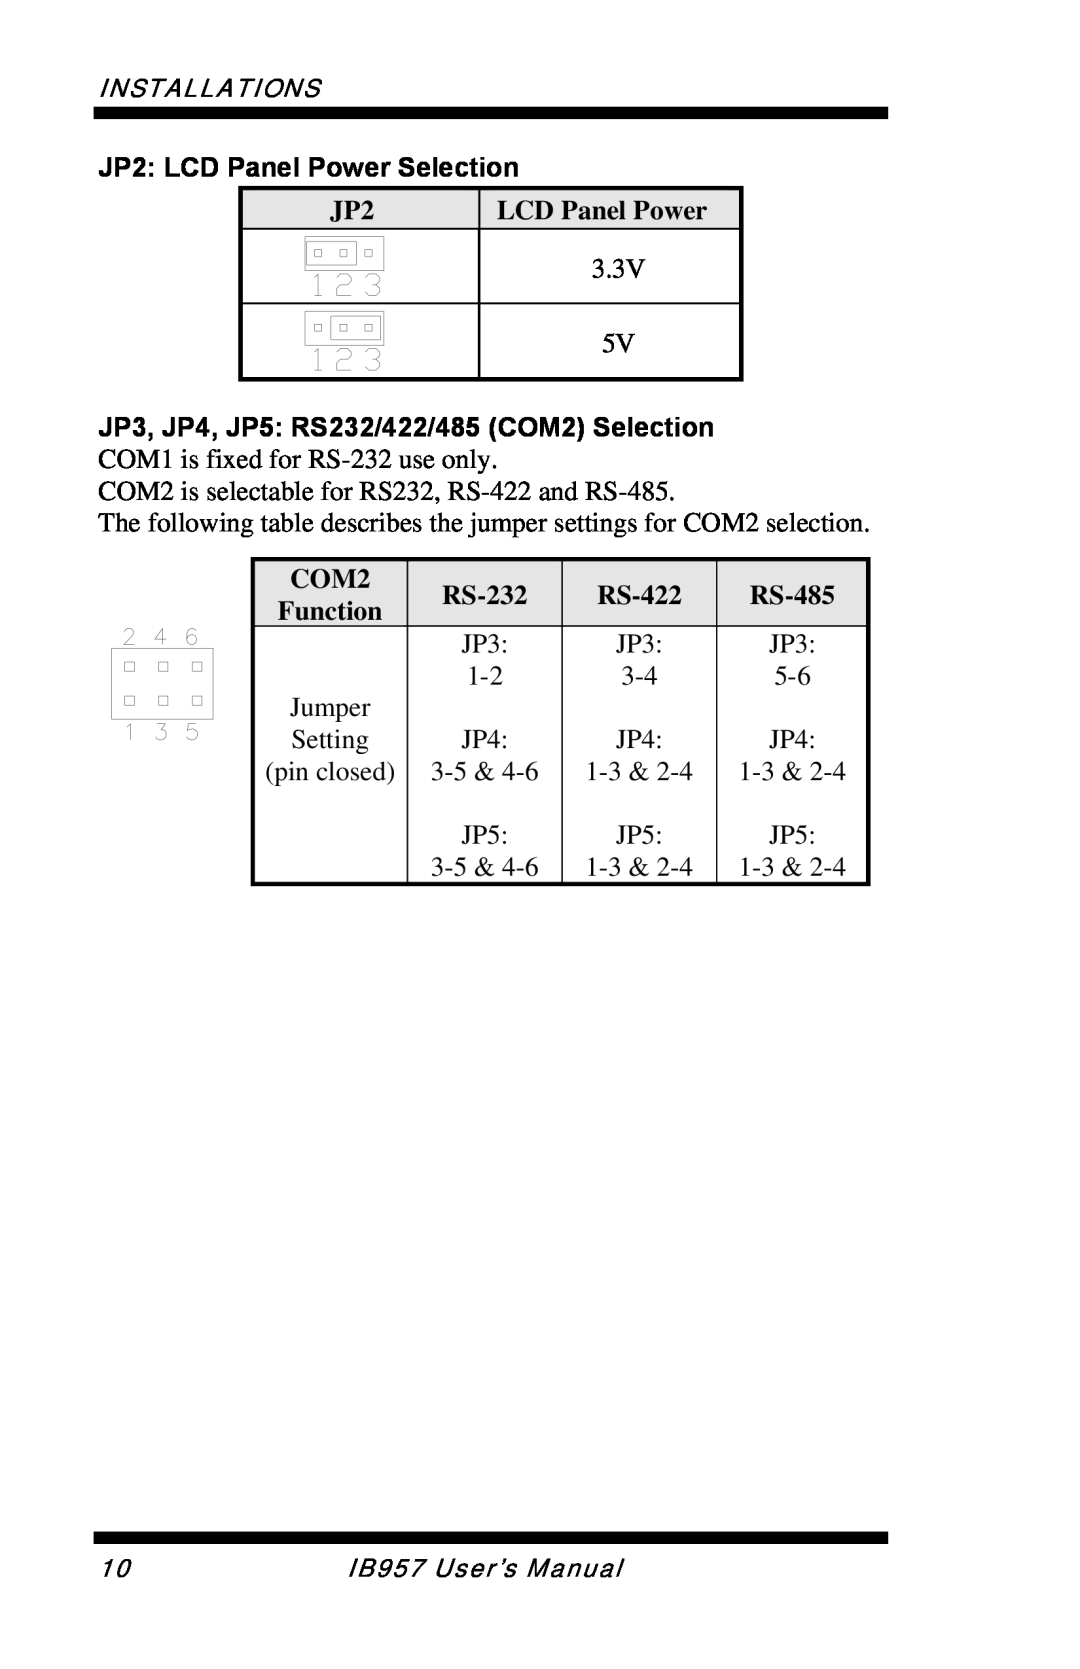 Intel IB957 user manual JP2 LCD Panel Power Selection, COM2, RS-232, Function, RS-422, RS-485 